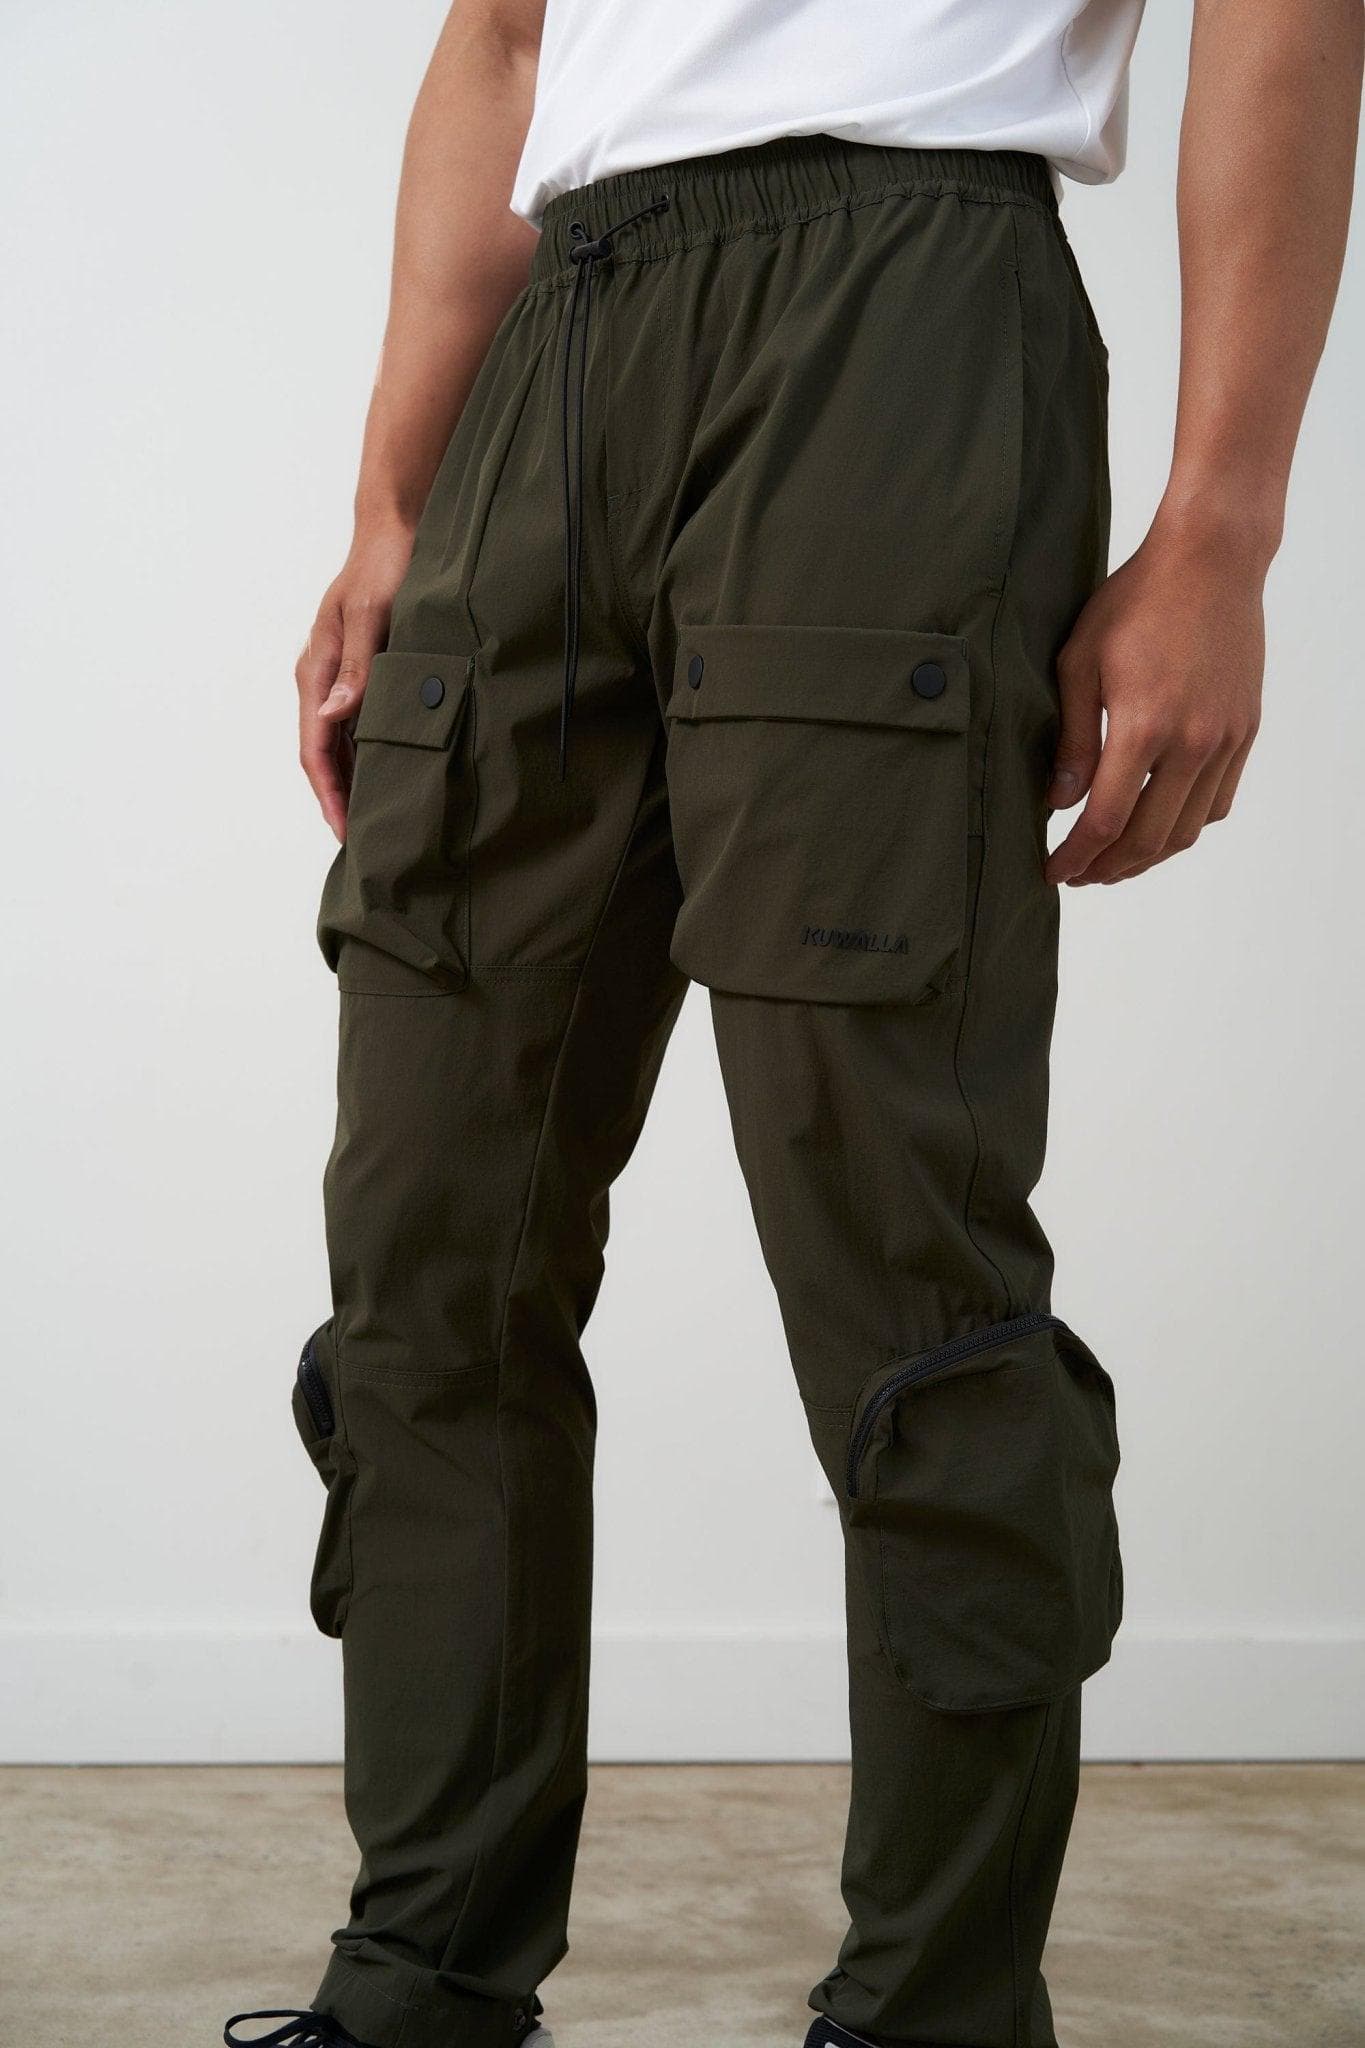 Kuwallatee Kuwalla Tee Men's 8-Pocket Stretch Utility Pants